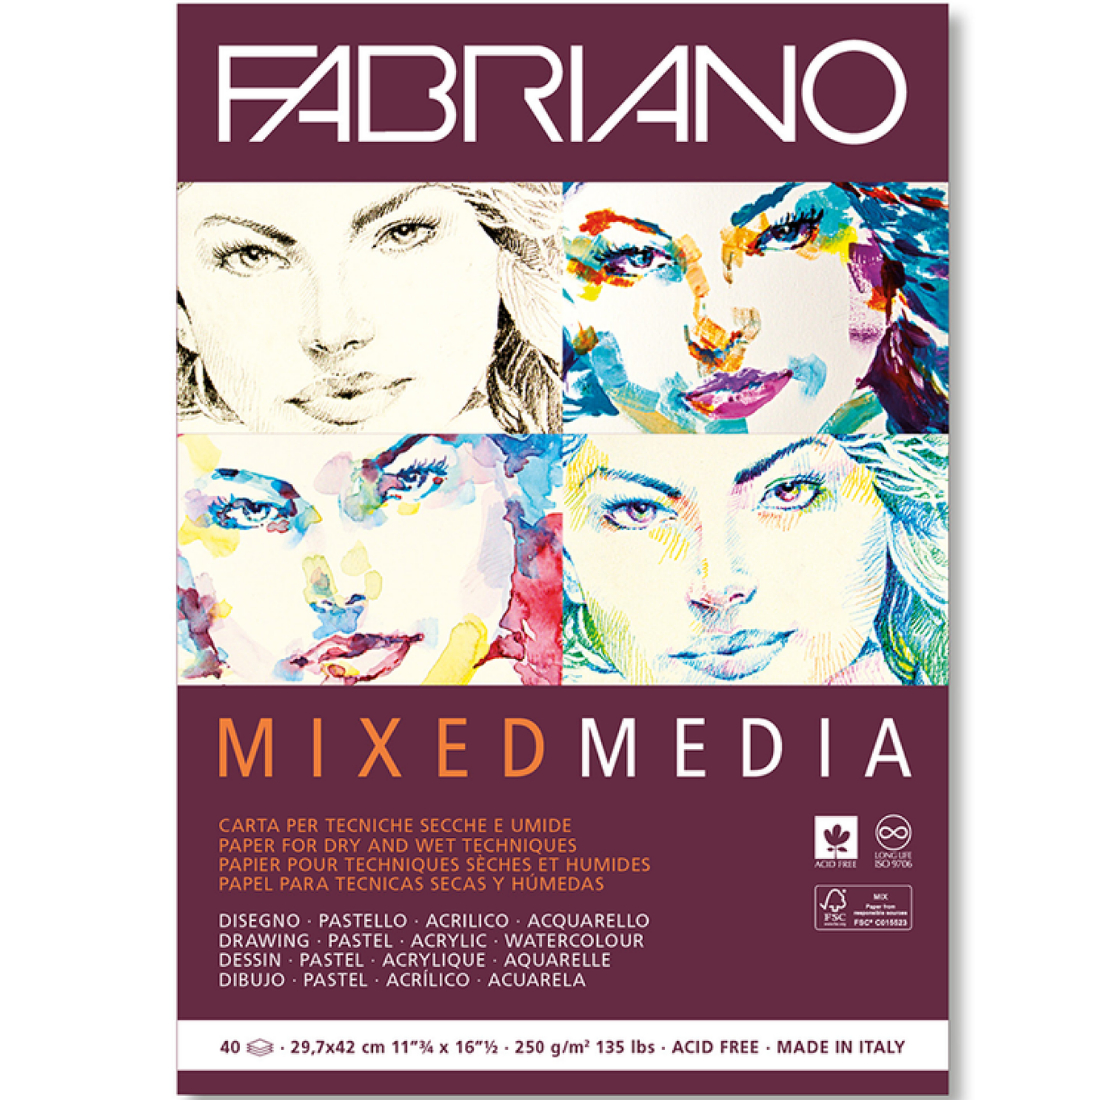 Bloco Papel Mixed Media da Fabriano